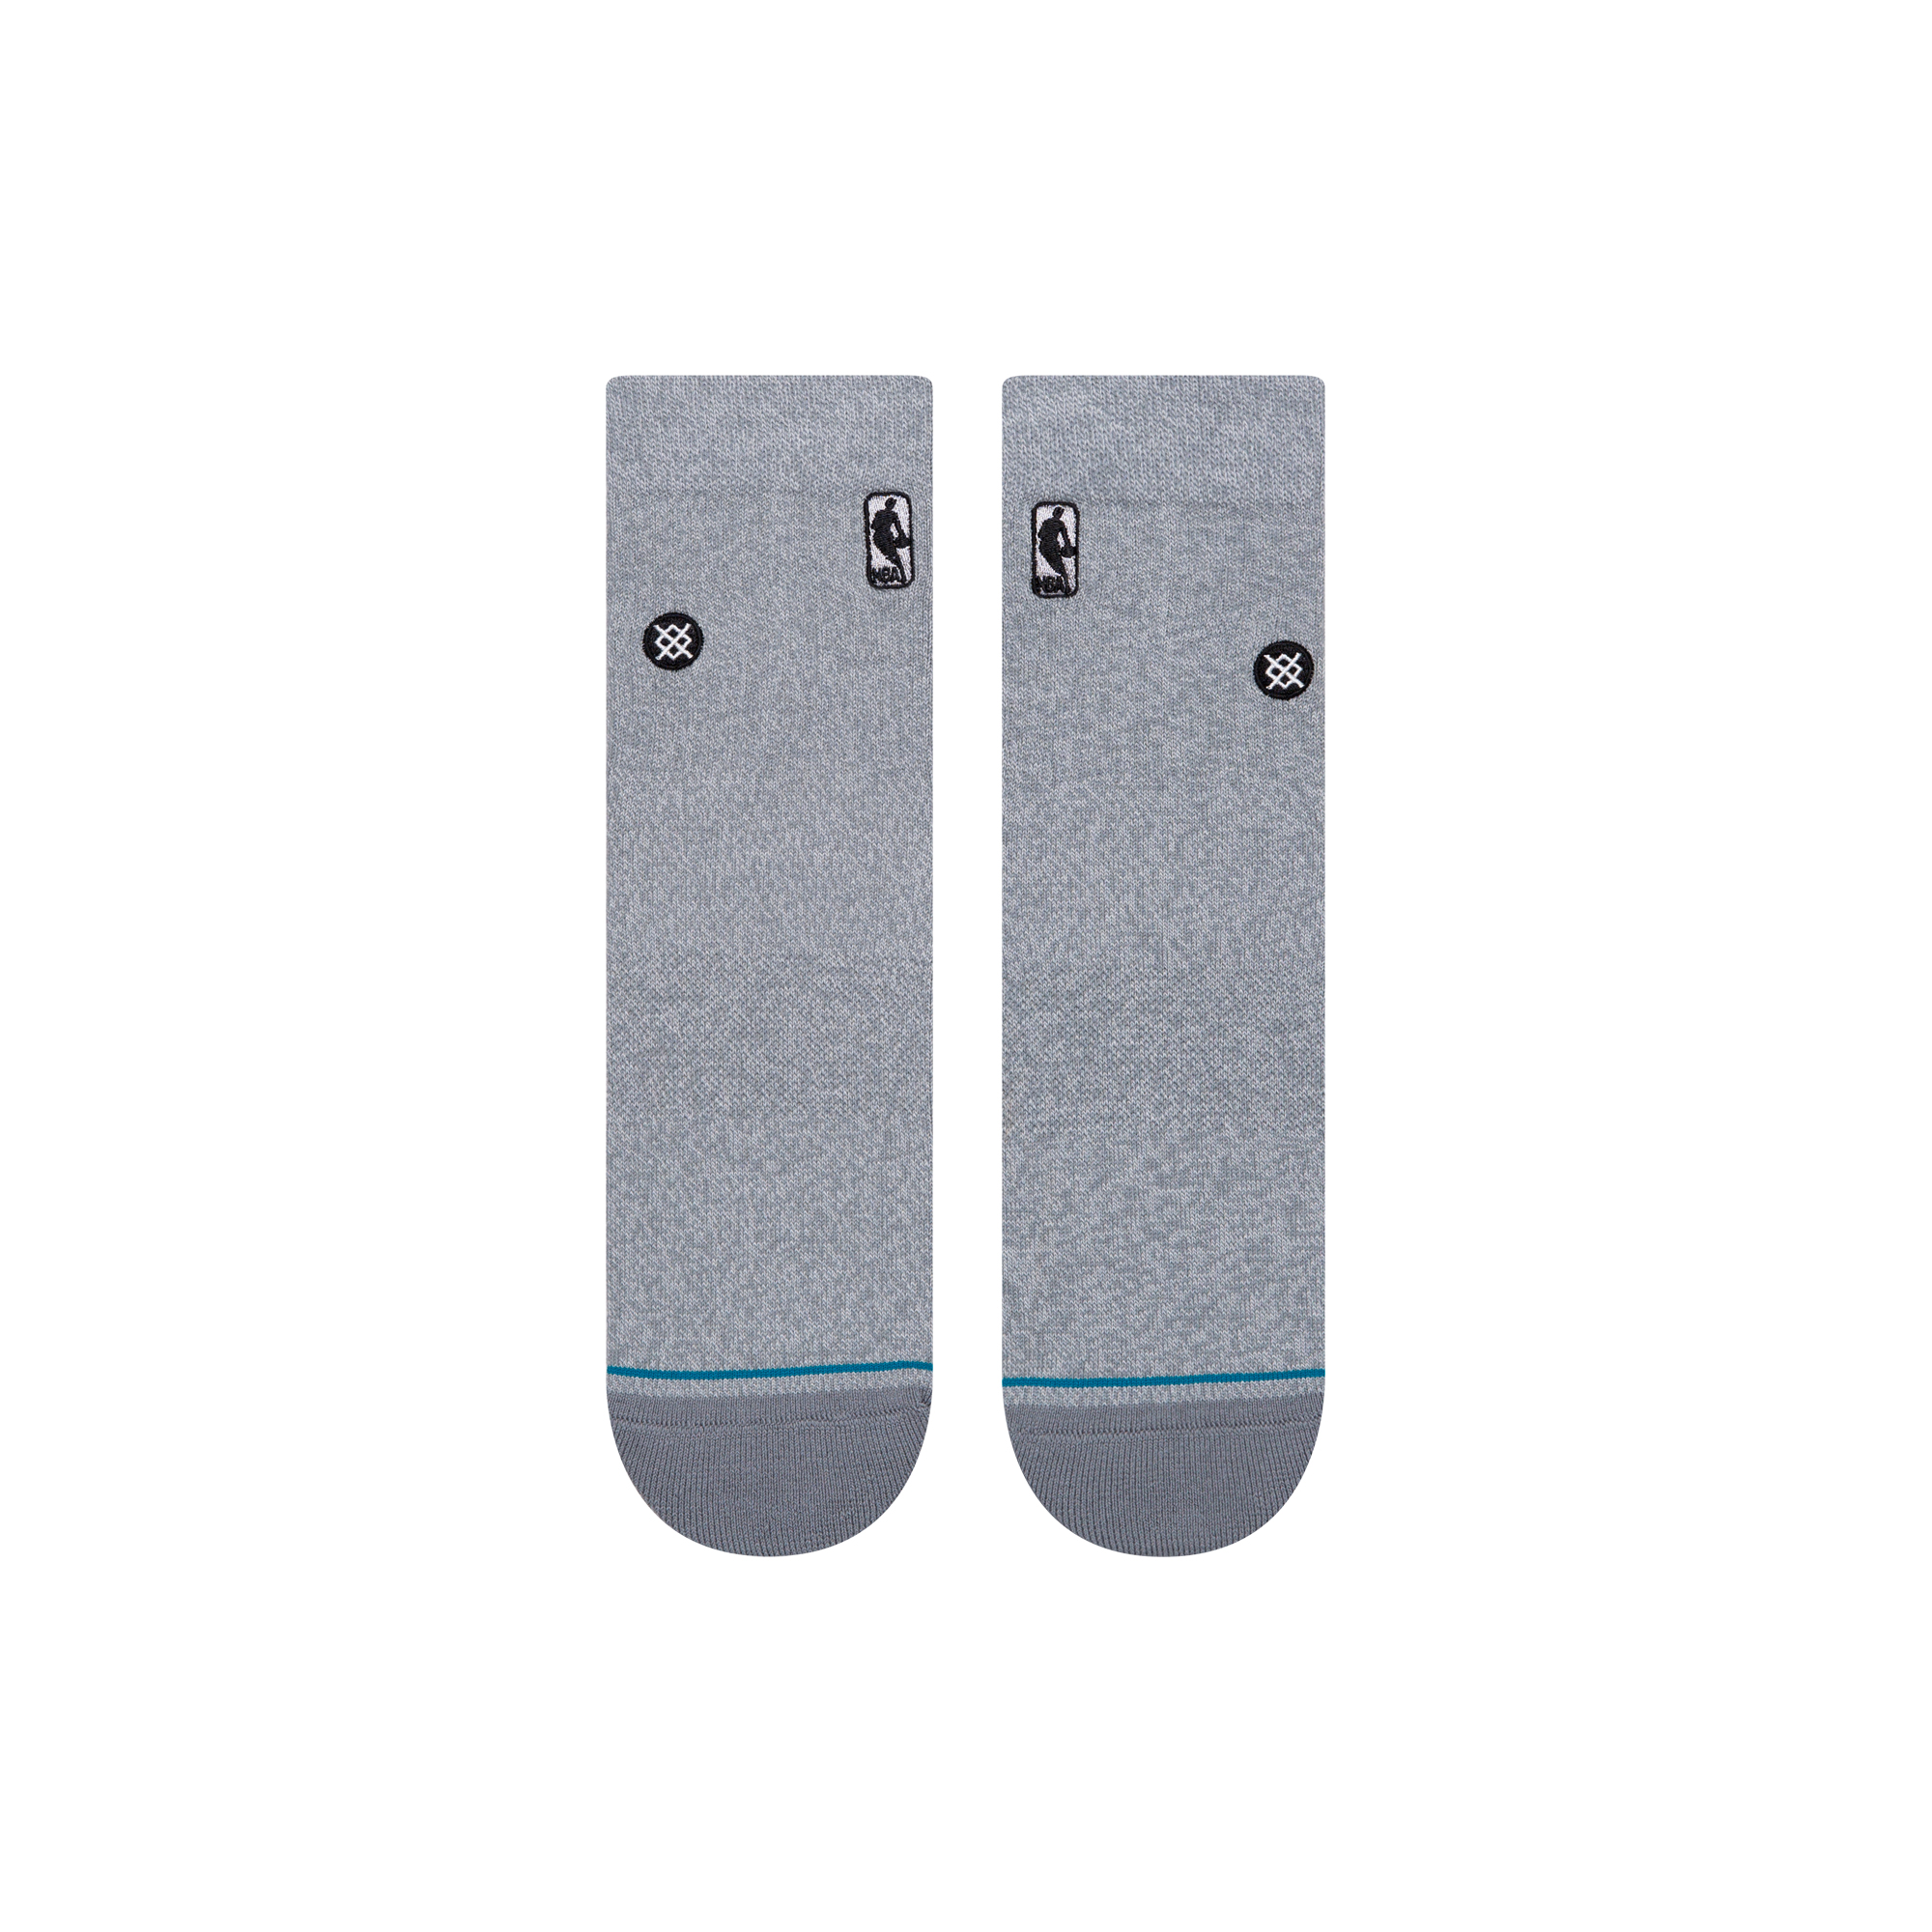 Stance NBA Logoman Quarter Socks | eBay